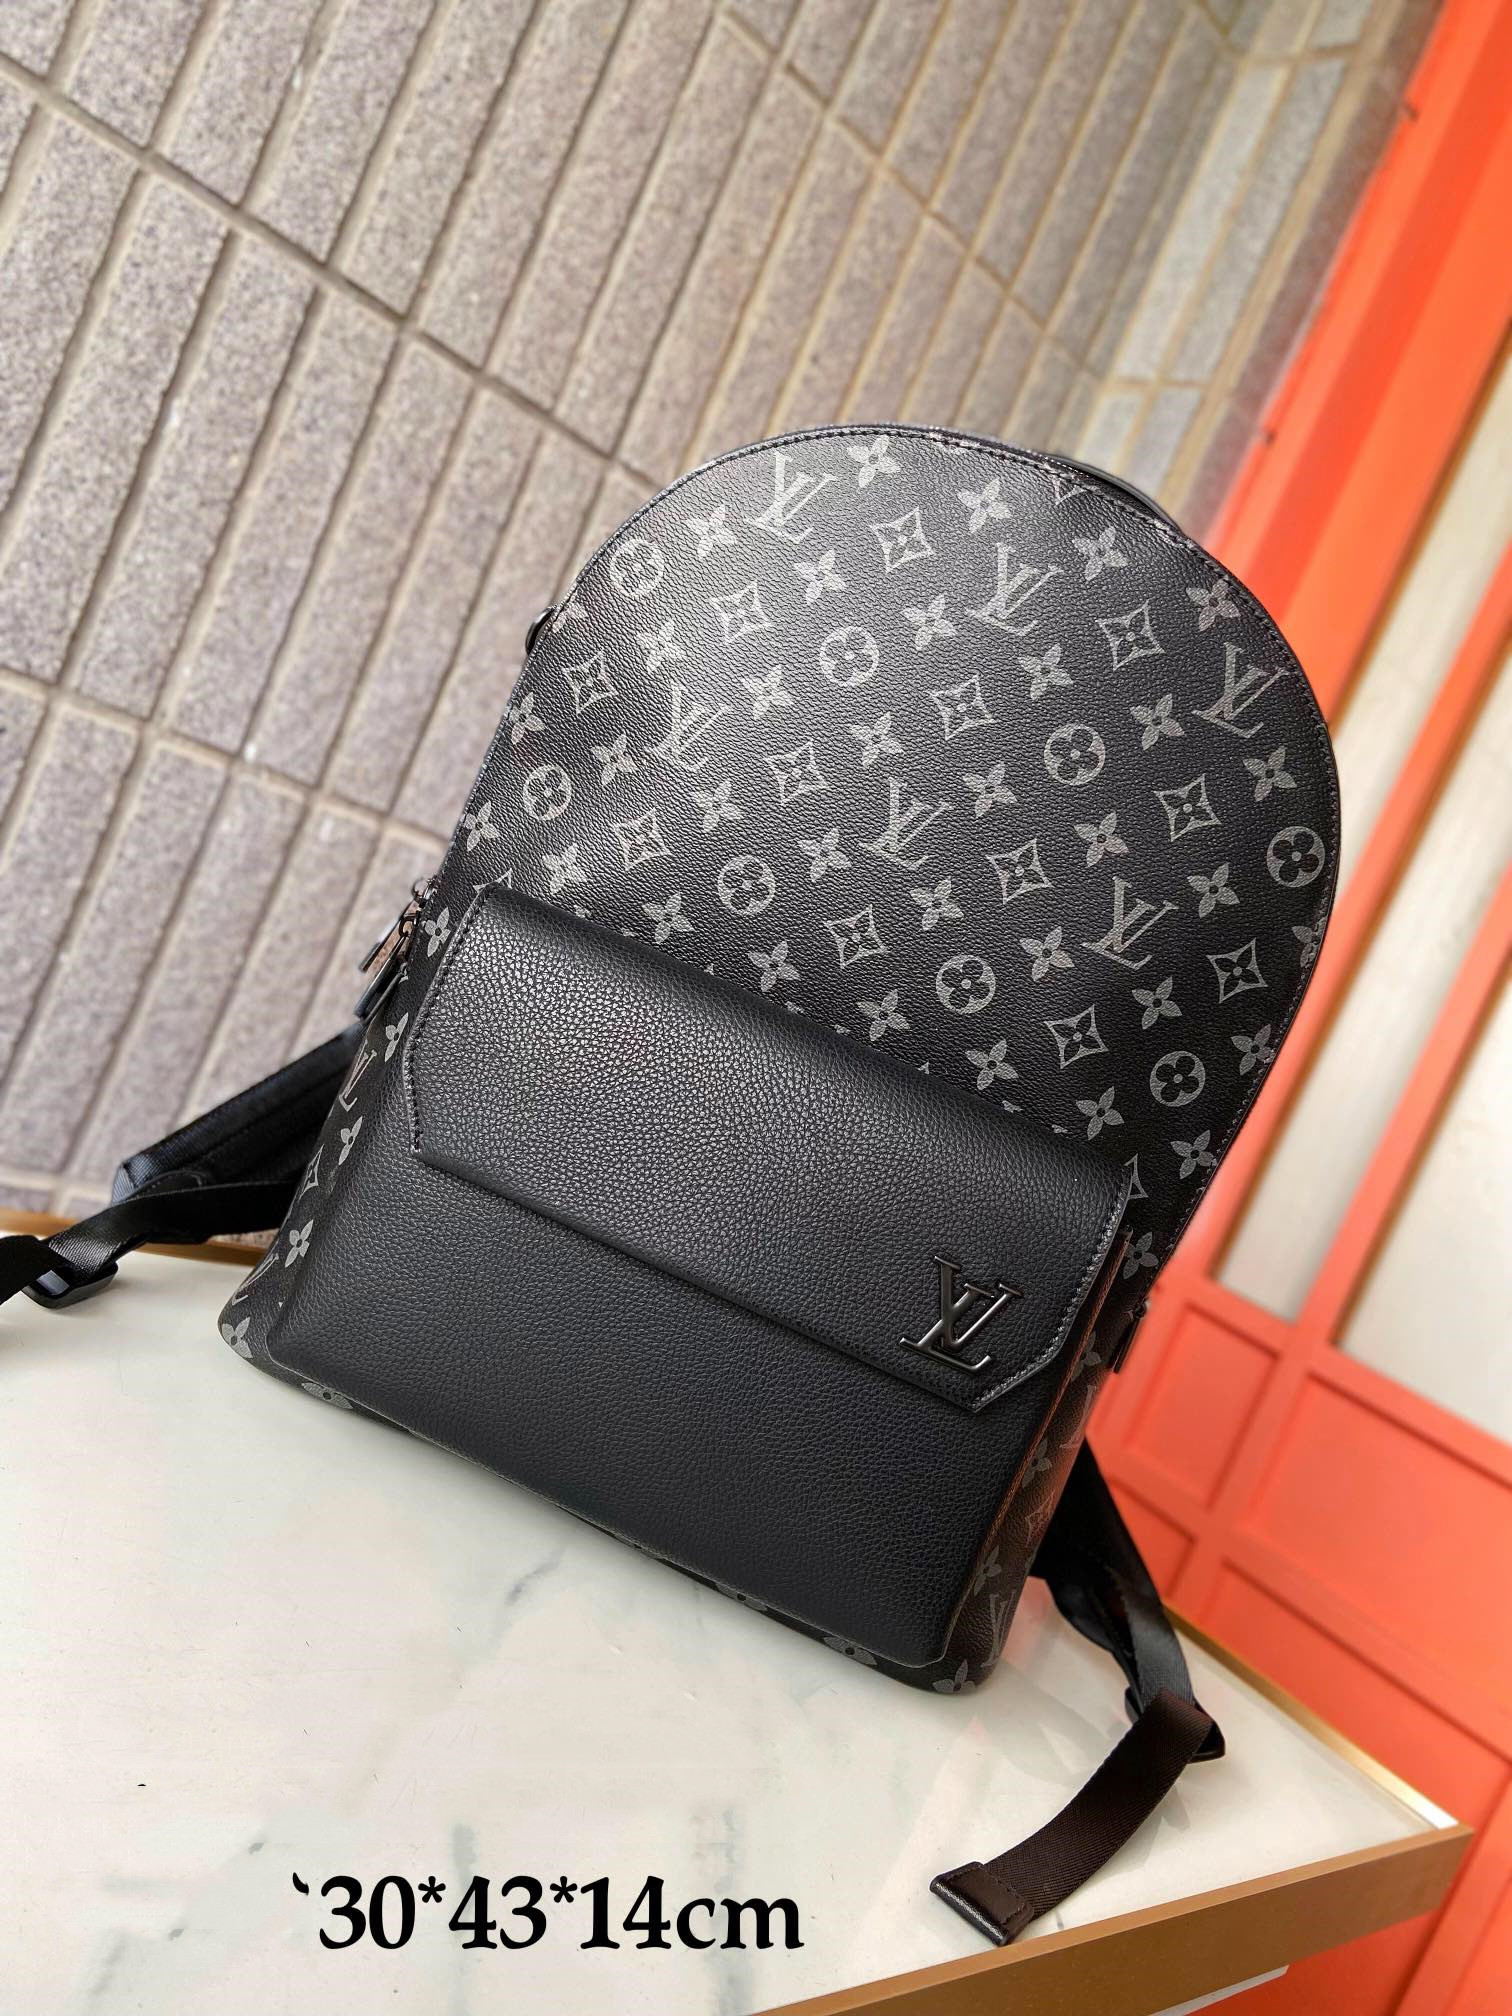 Louis new arrival 🇲🇱Aerogram backpack bag size : 43 x 30 x 14 cm